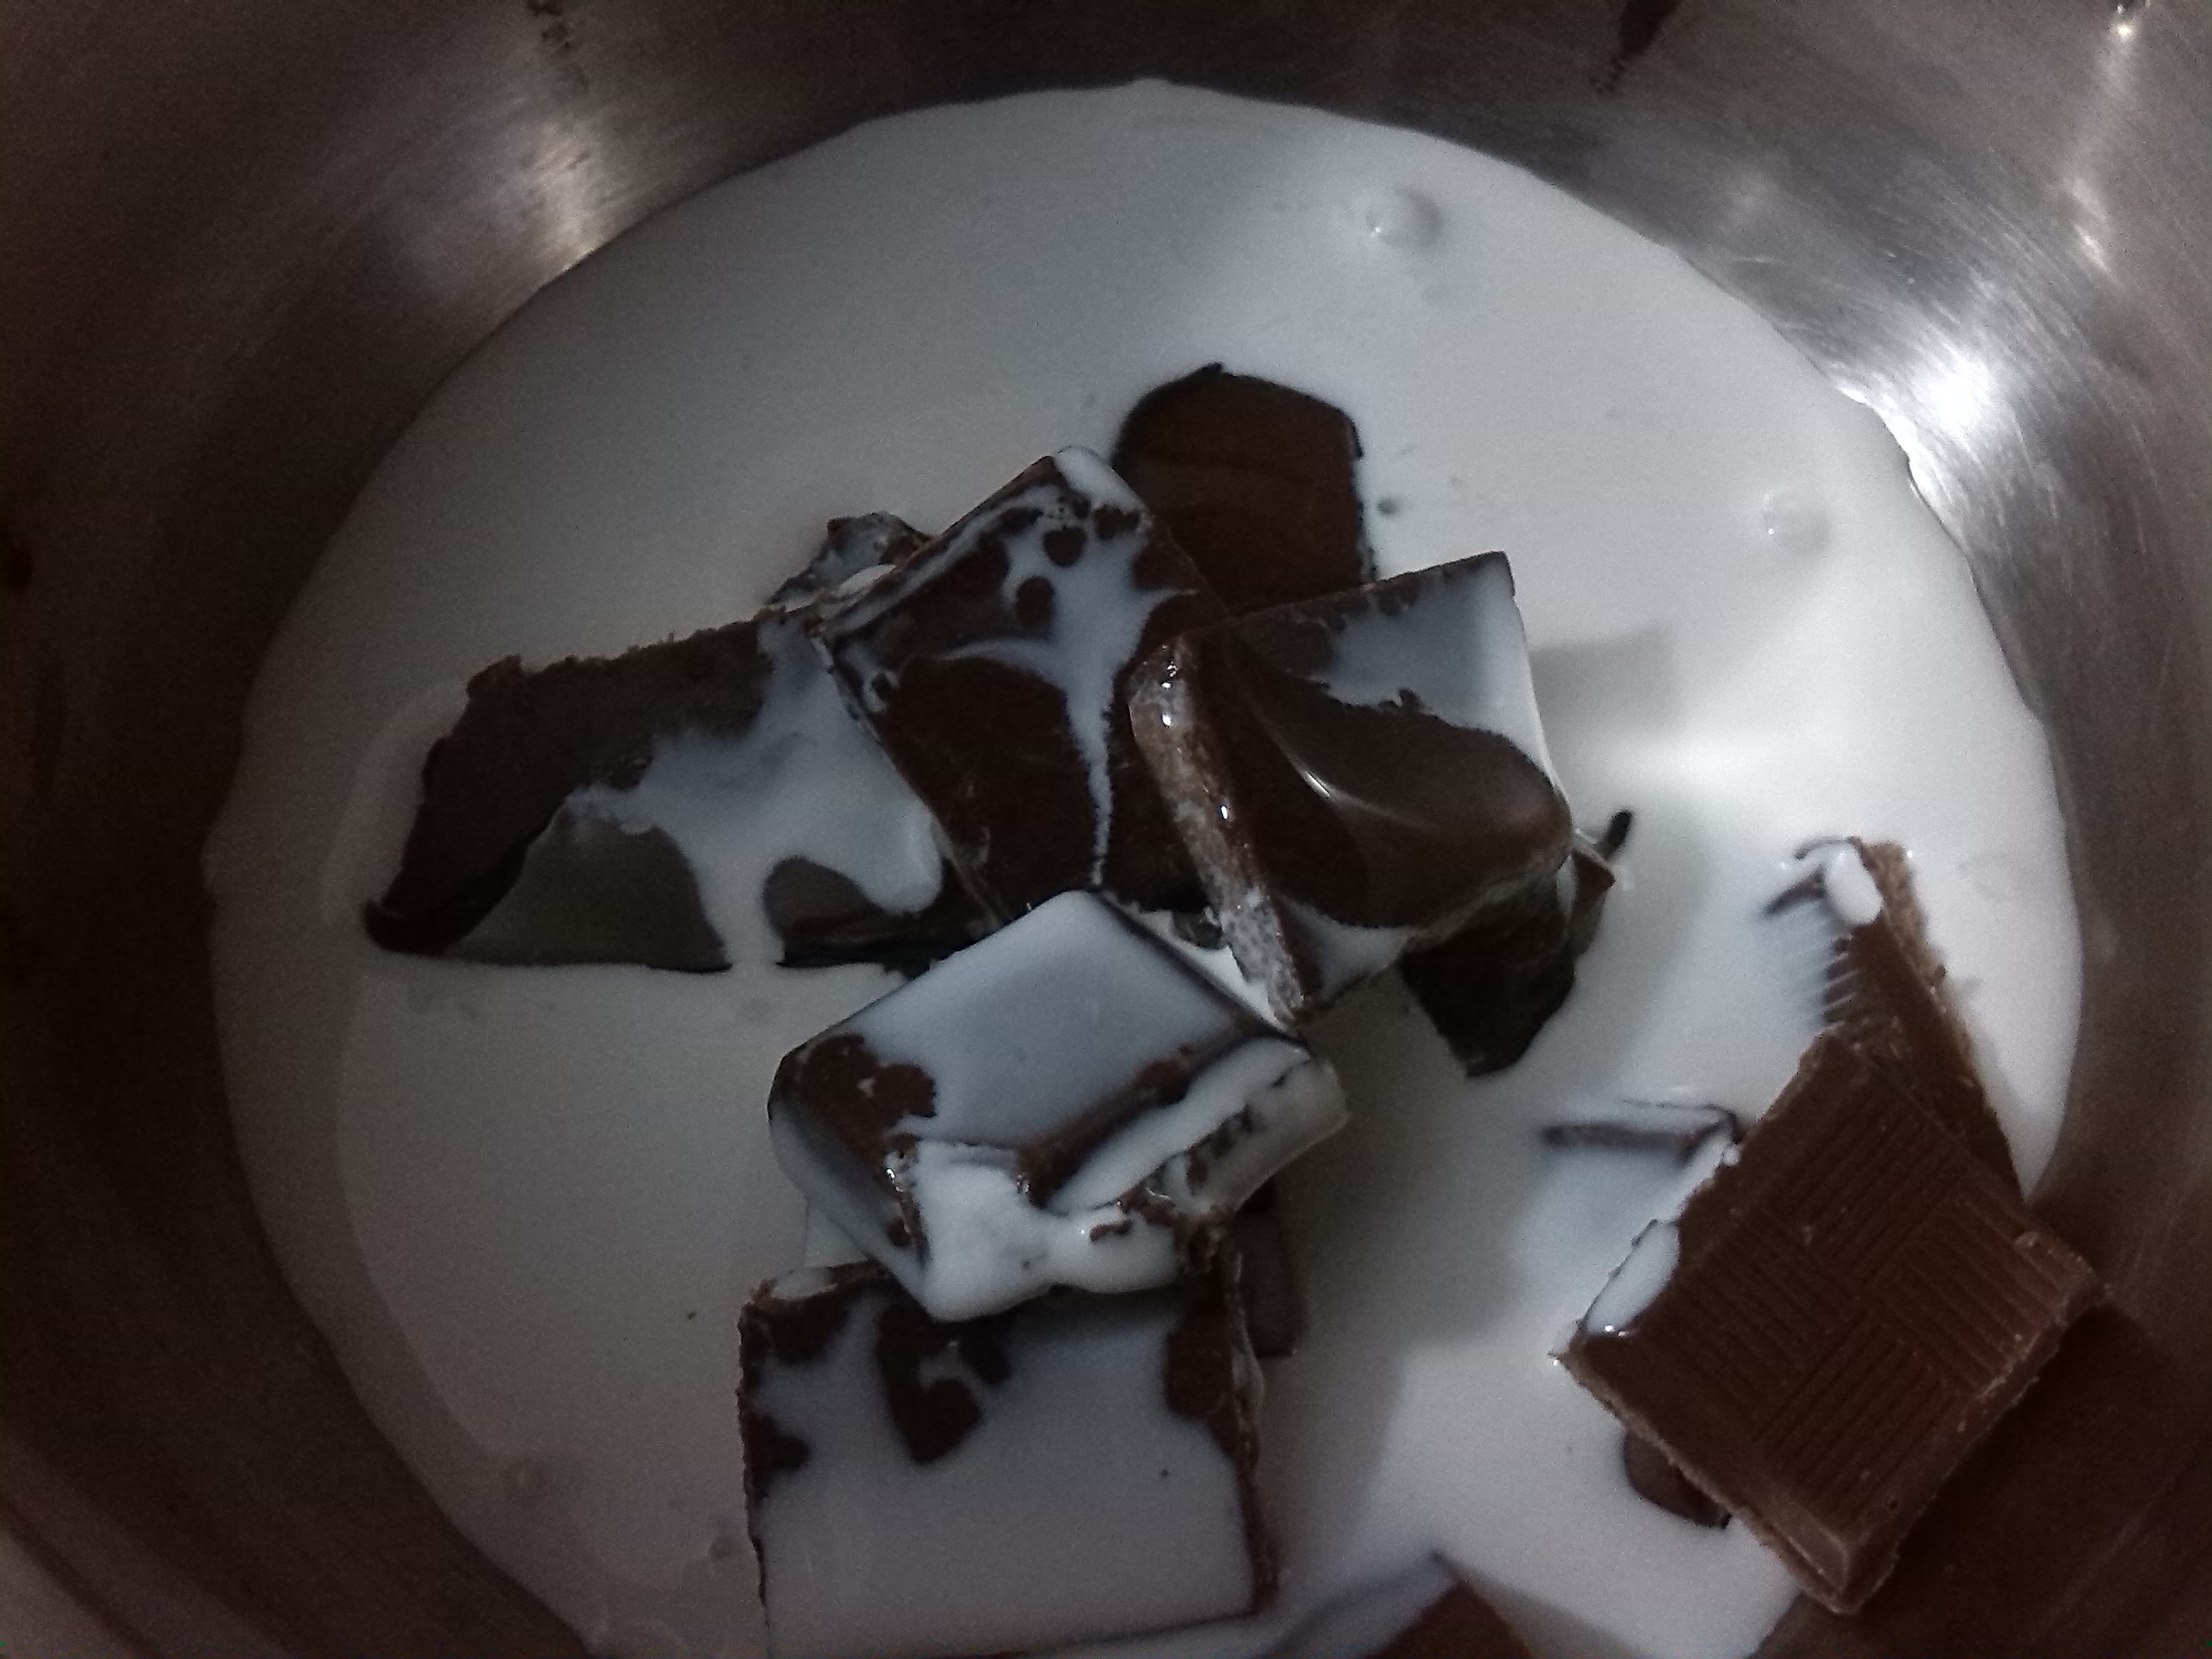 Reteta nr. 200 : Tort cu crema de ciocolata